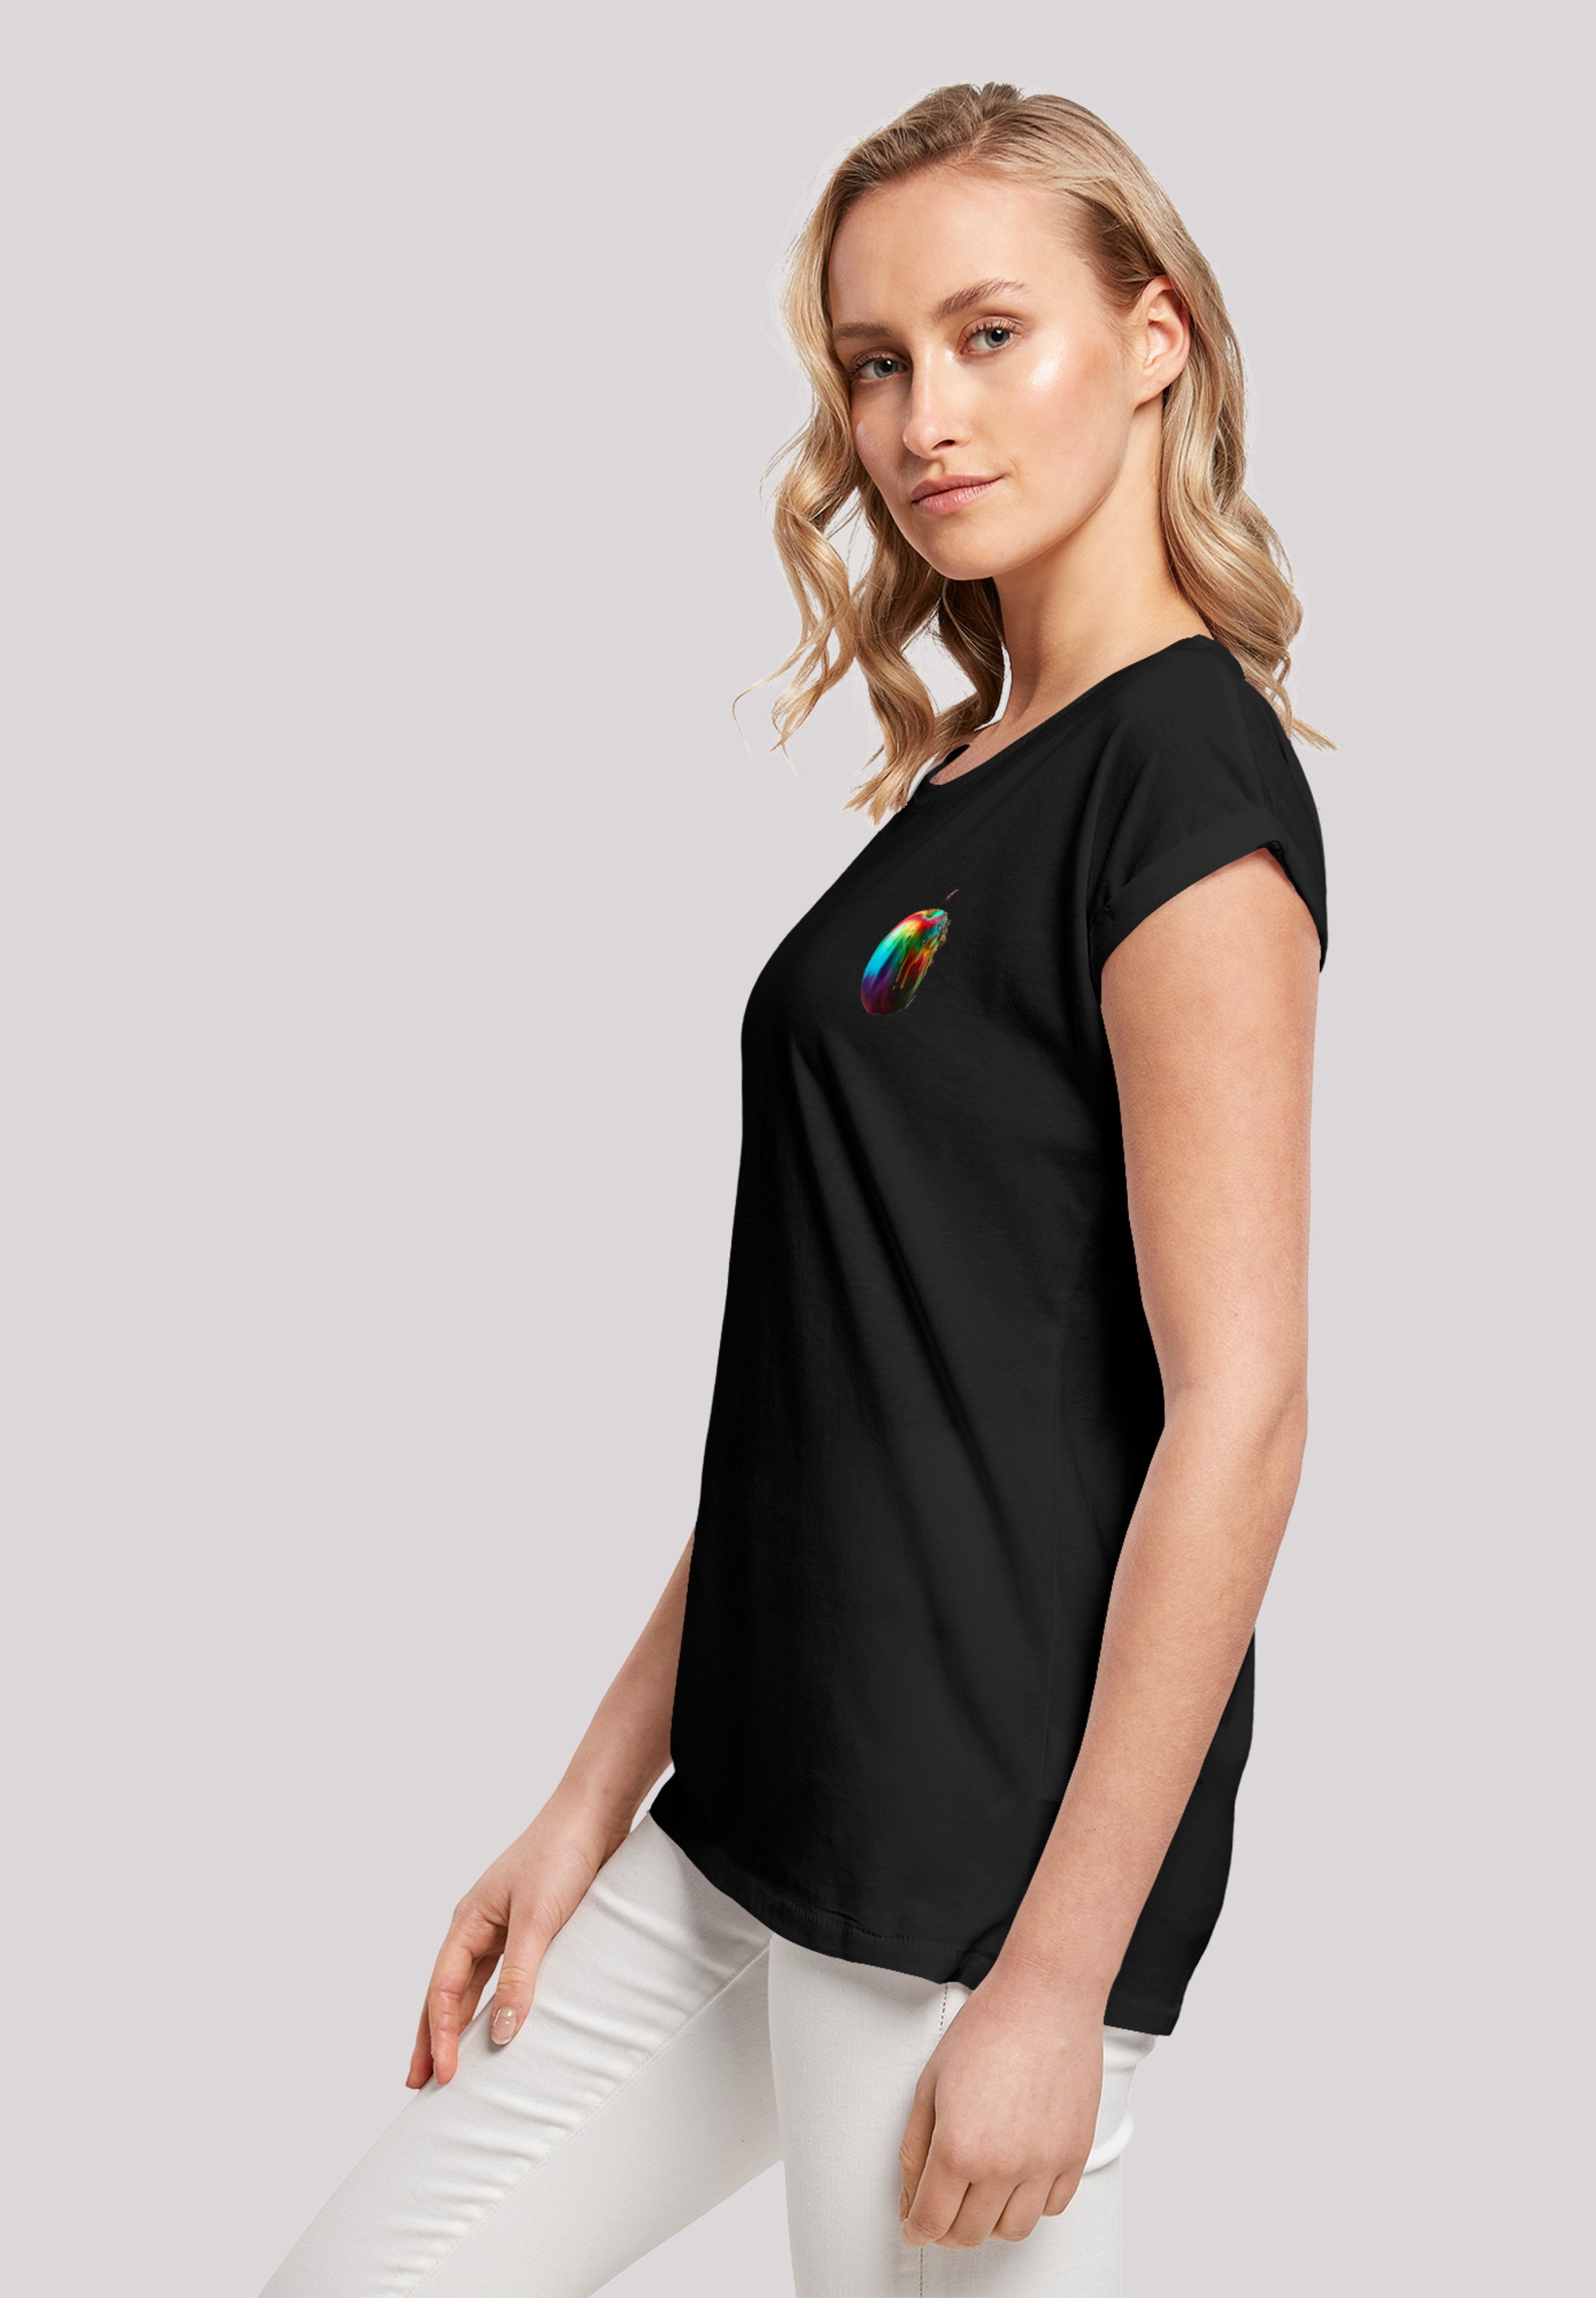 - bestellen »Colorfood F4NT4STIC Collection T-Shirt Print Rainbow Apple«,